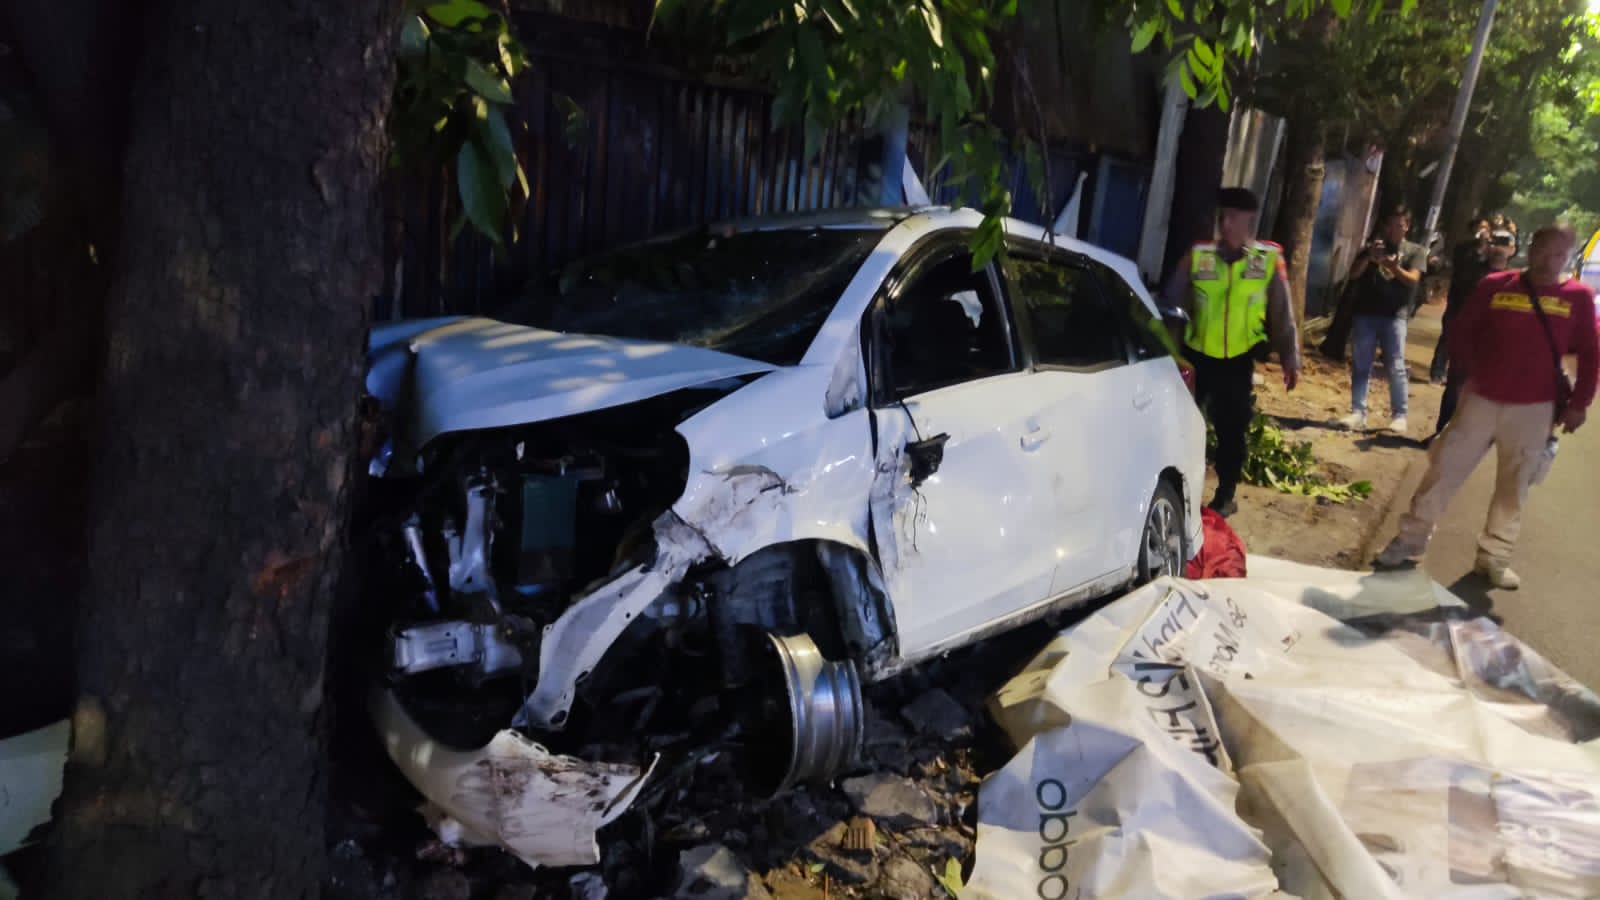 Ist. Kendaraan yang dikemudikan pria berusia 16 tahun Bandung usai terlibat tabrakan di Jl. Rumah Sakit. Dok. Satlantas Polrestabes Bandung.